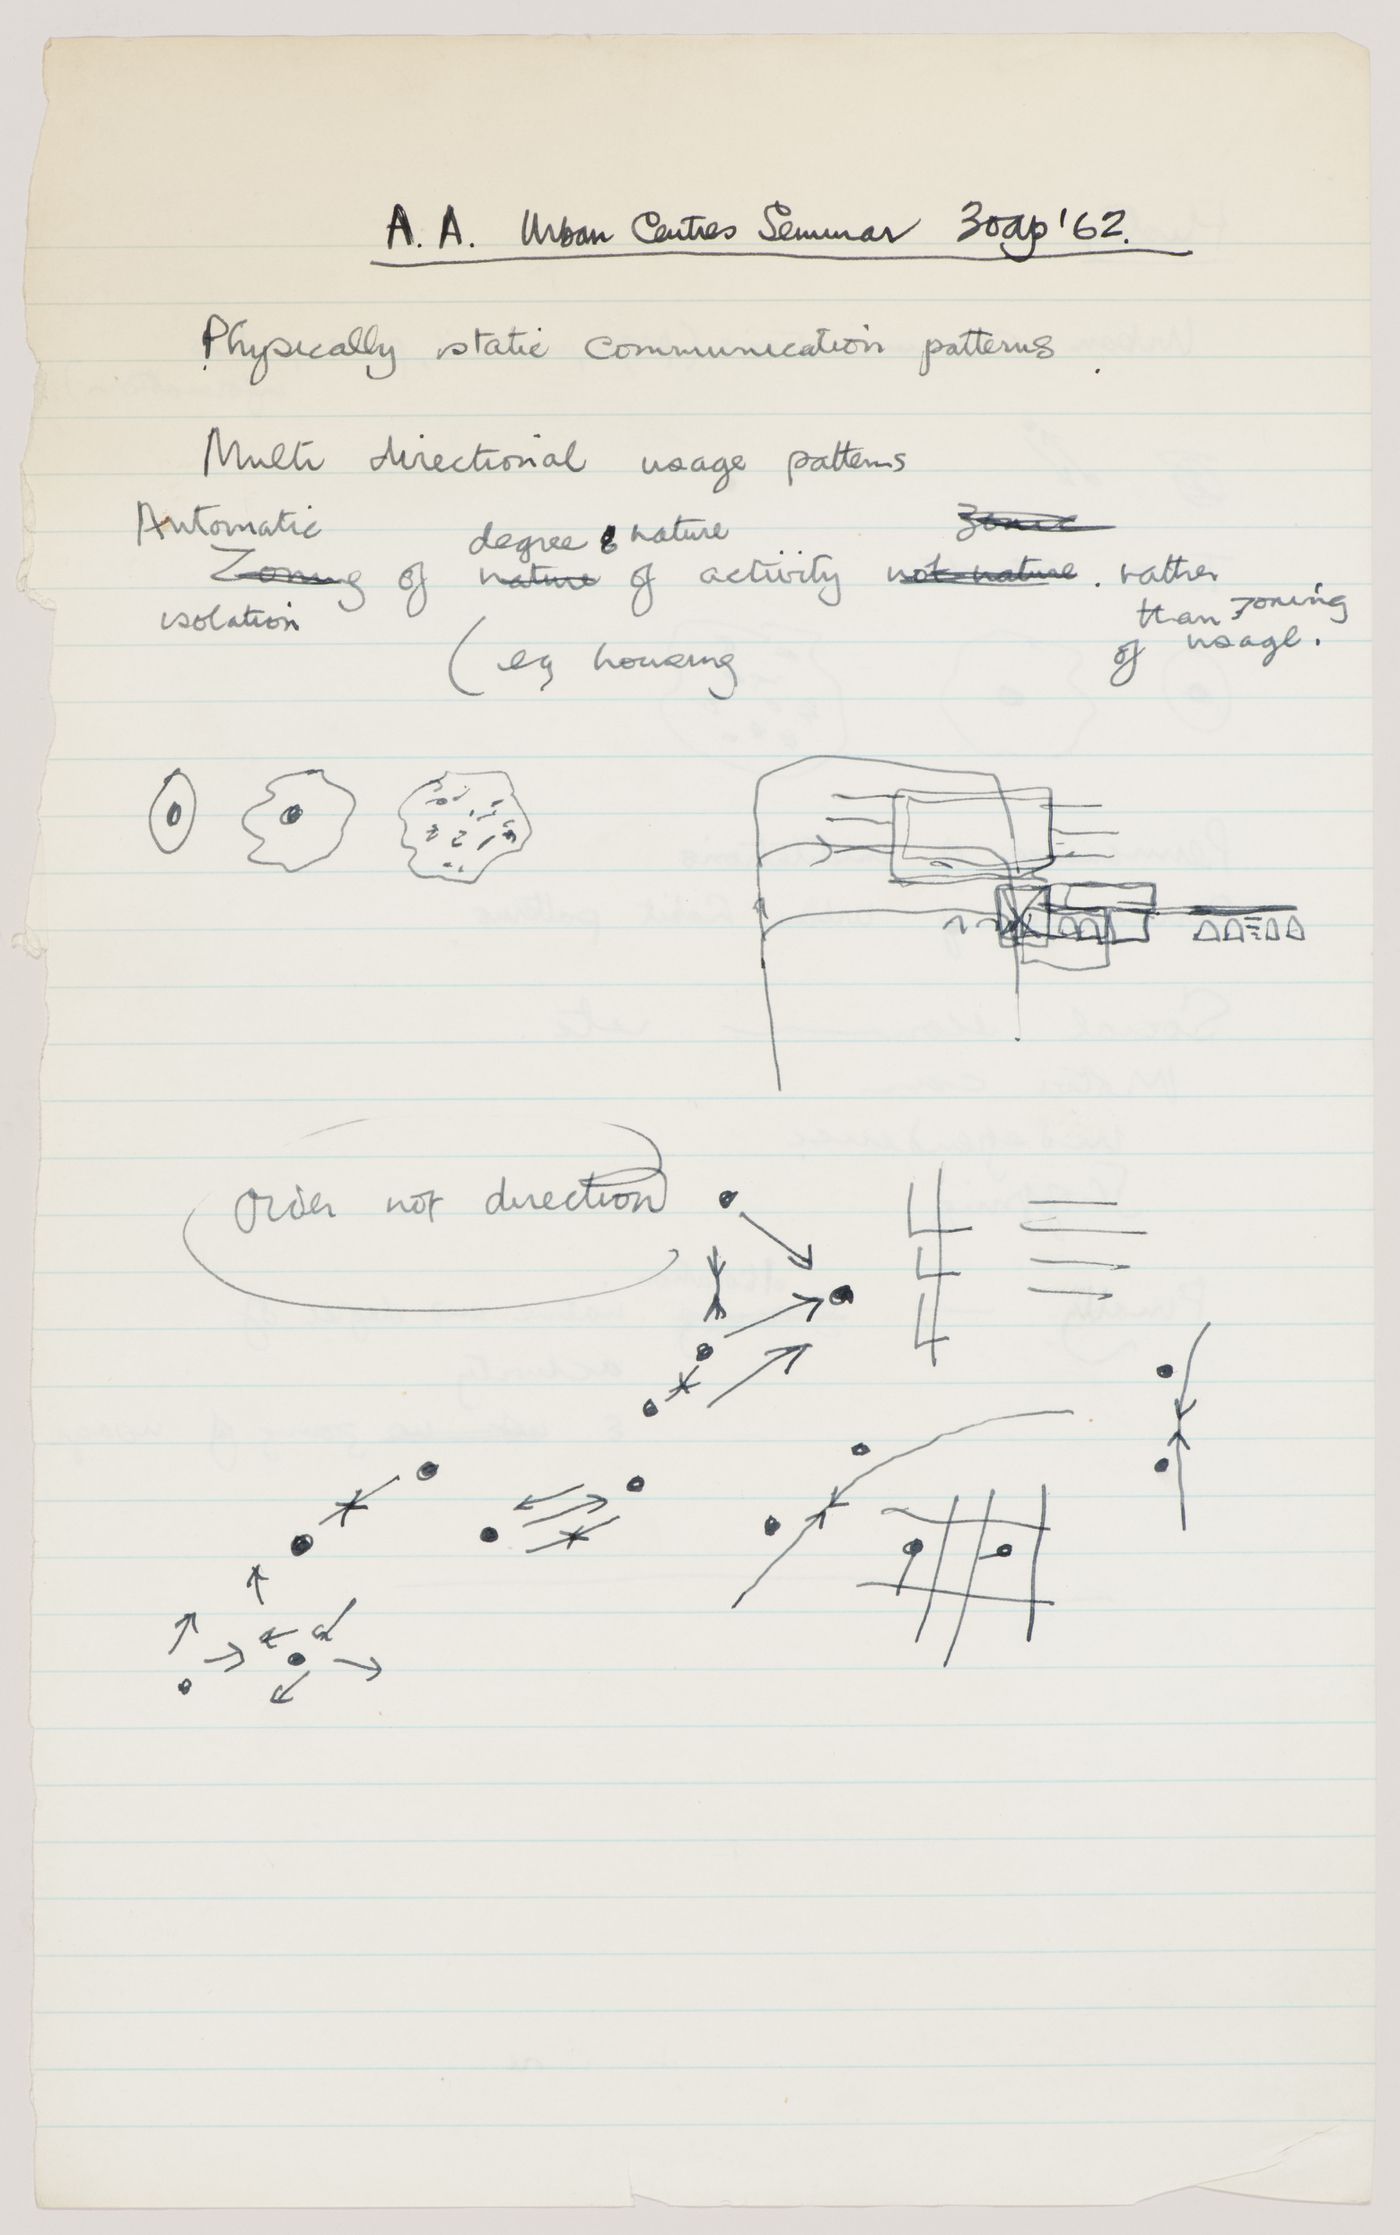 Notes from Architectural Association Urban Centres Seminar, 30 April 1962